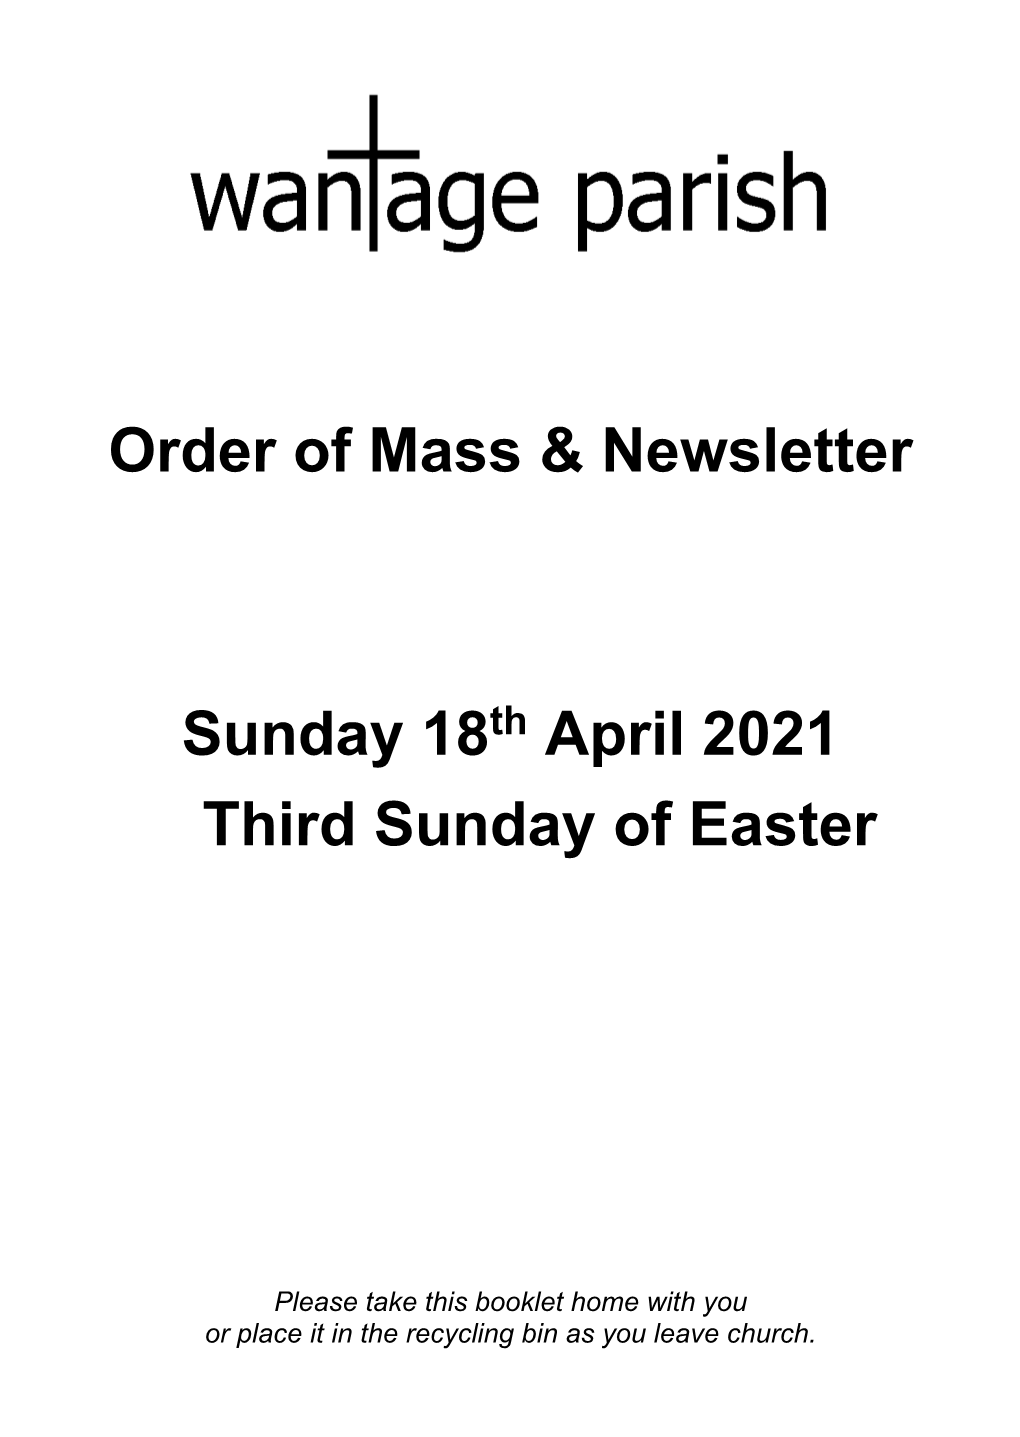 Order of Mass & Newsletter Sunday 18 April